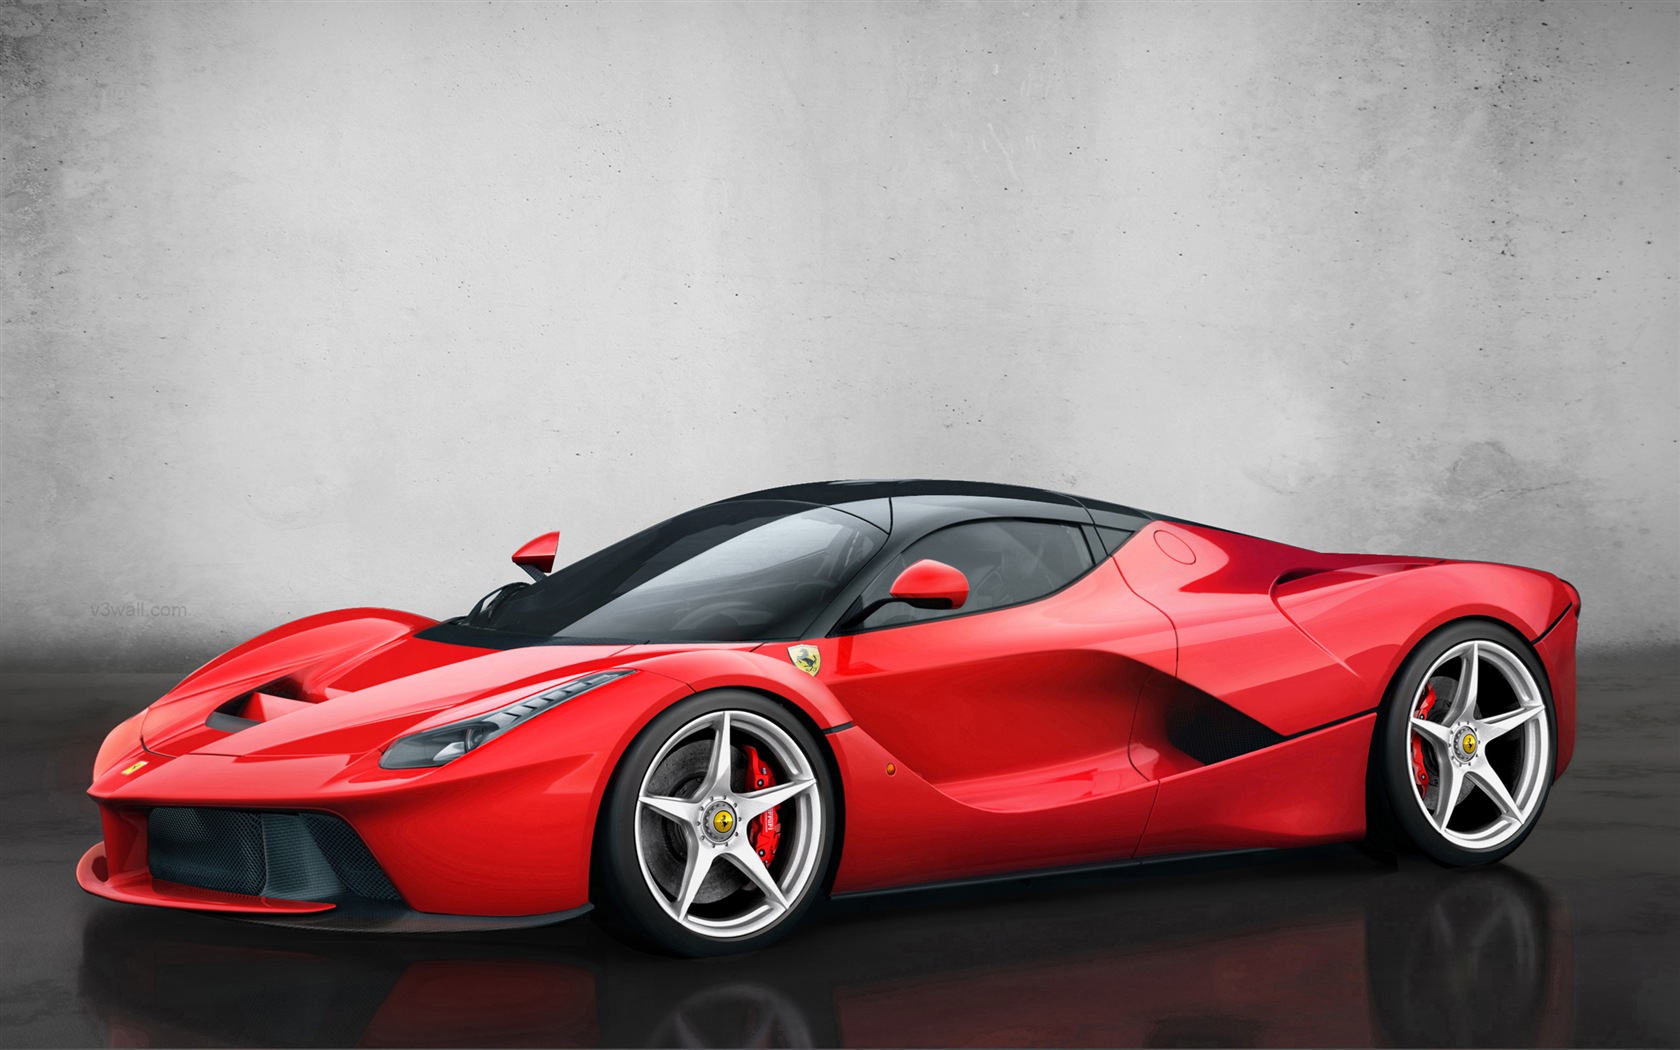 2013 Ferrari LaFerrari red supercar HD Wallpaper #7 - 1680x1050